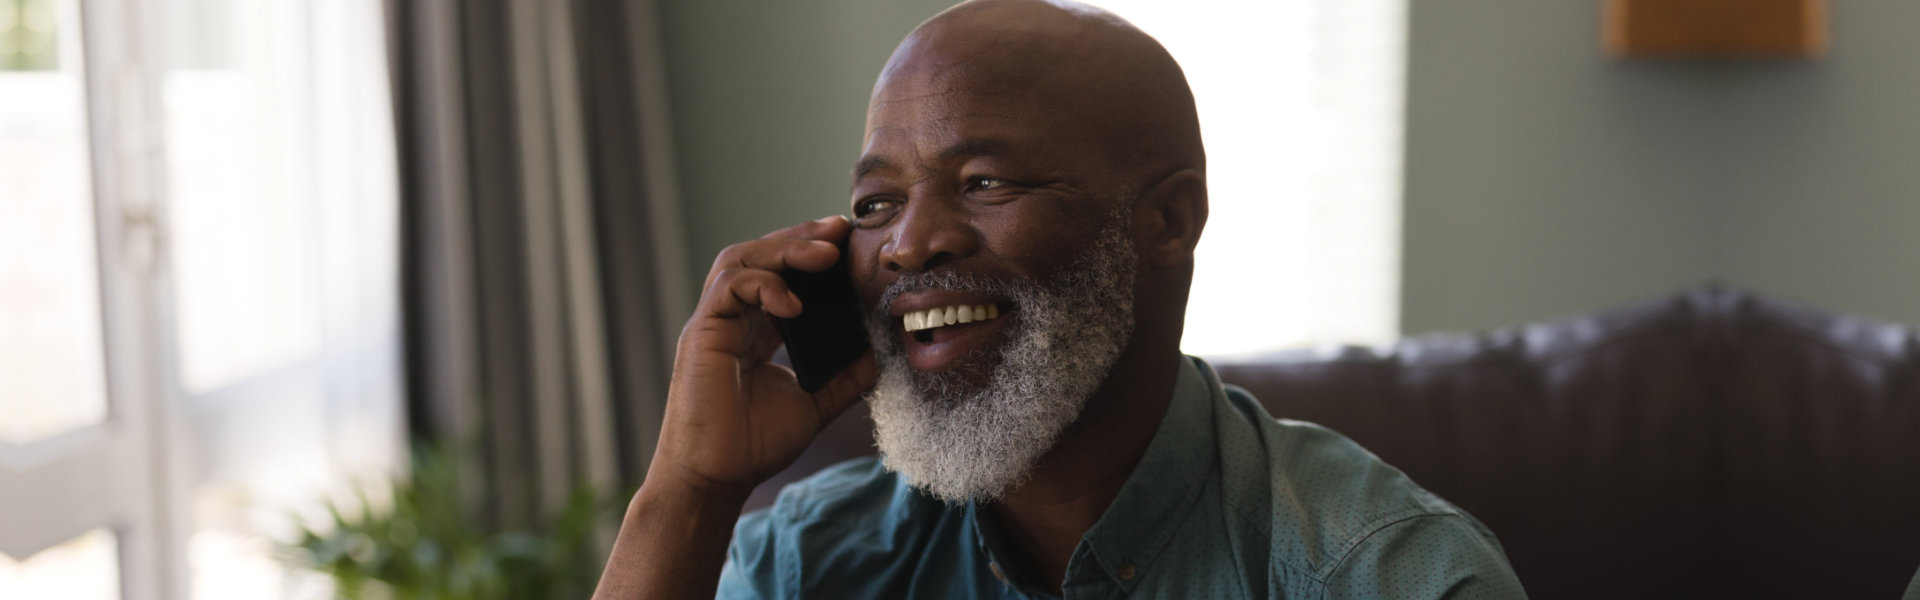 portrait of elderly man calling someone on mobile phone